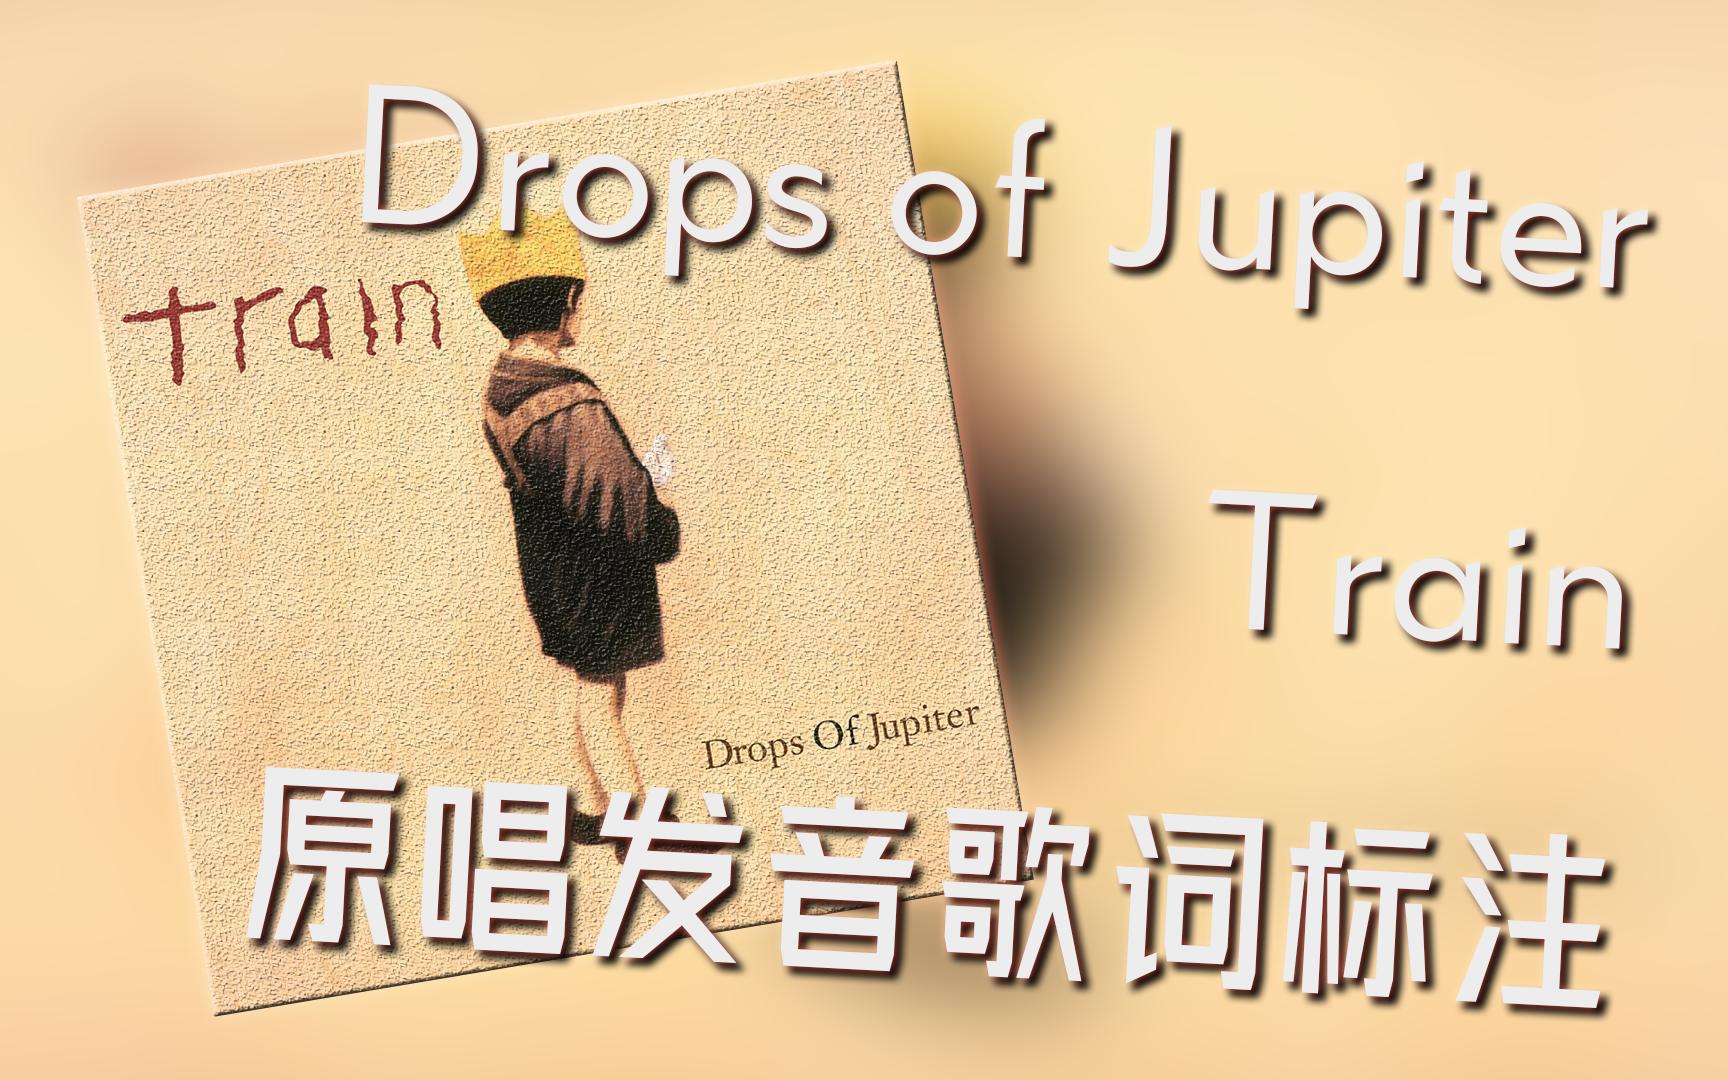 伴原唱学原曲：Drops of Jupiter - Train歌词发音标注